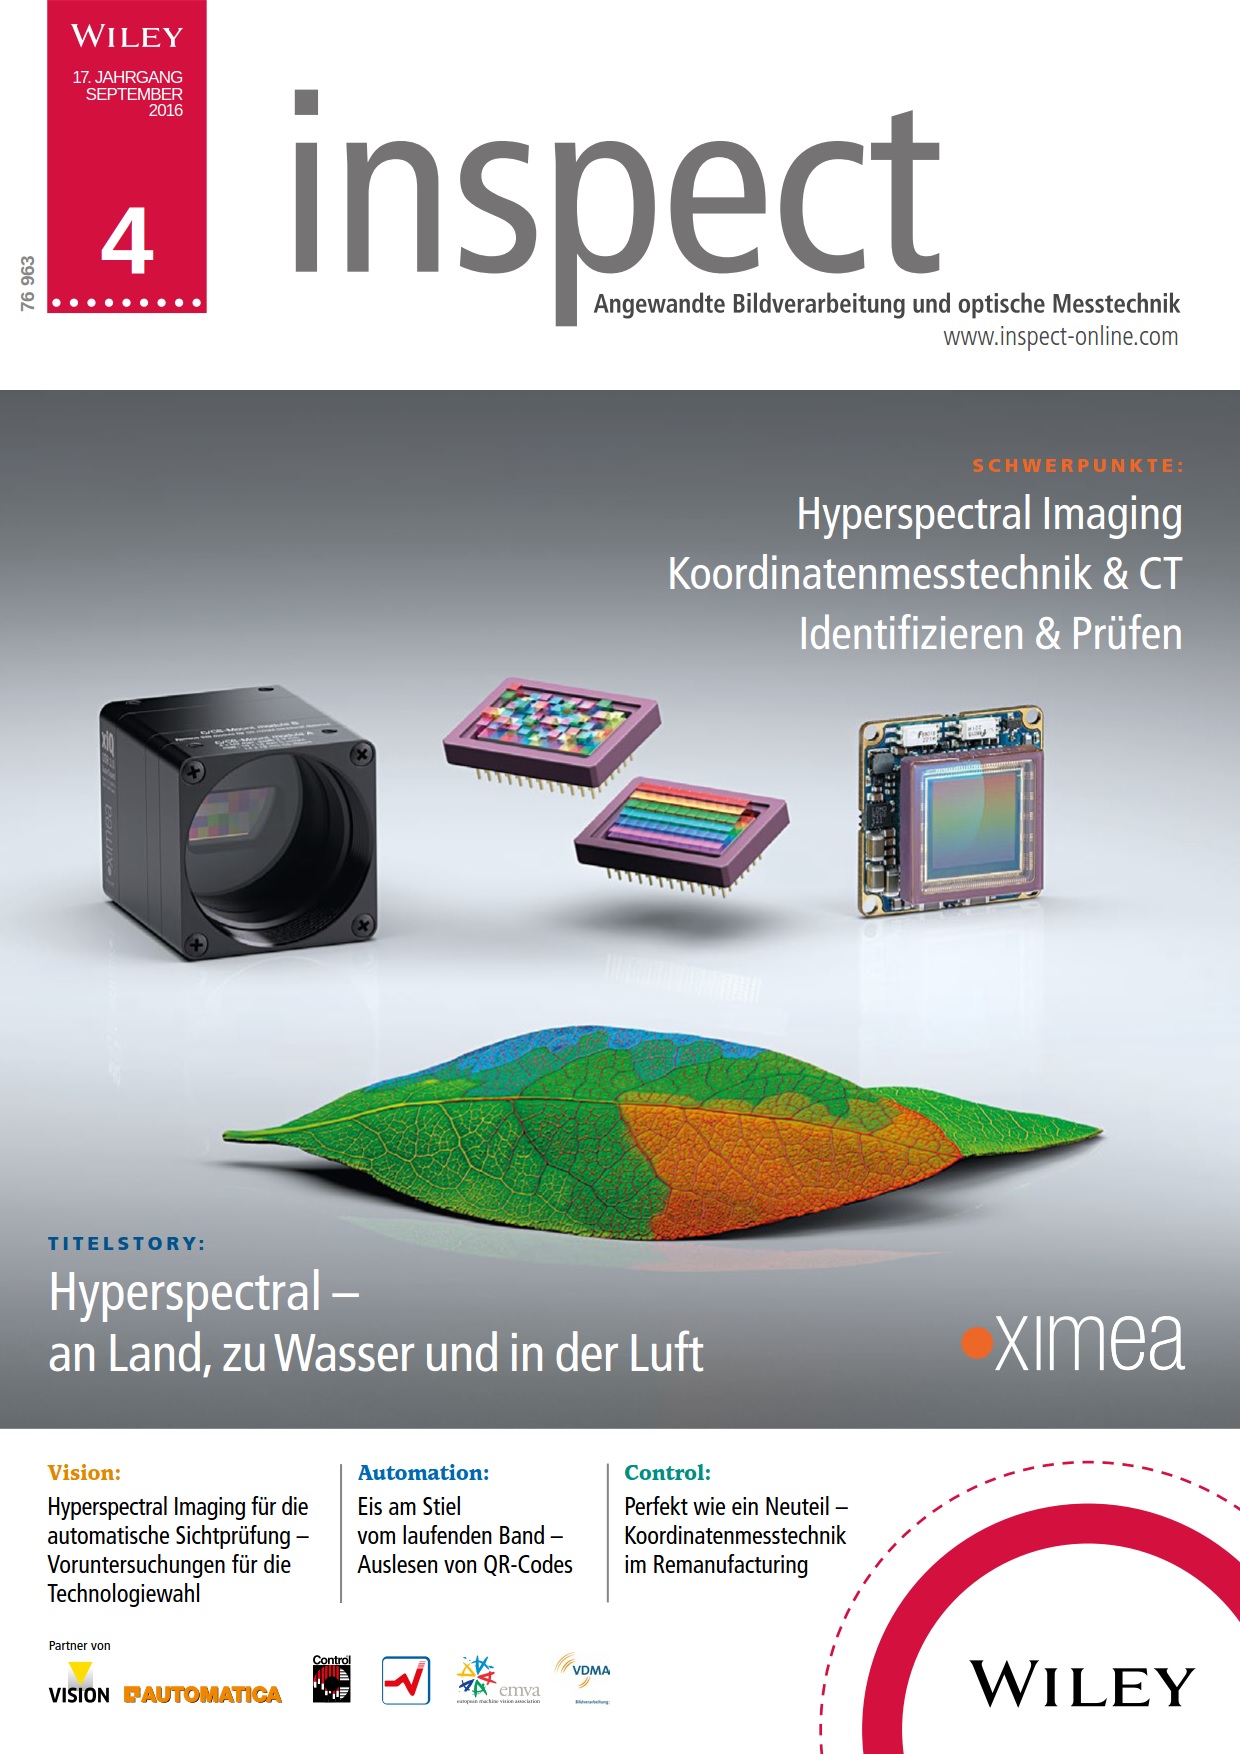 Inspect online magazine German Vision machine Hyperspectral